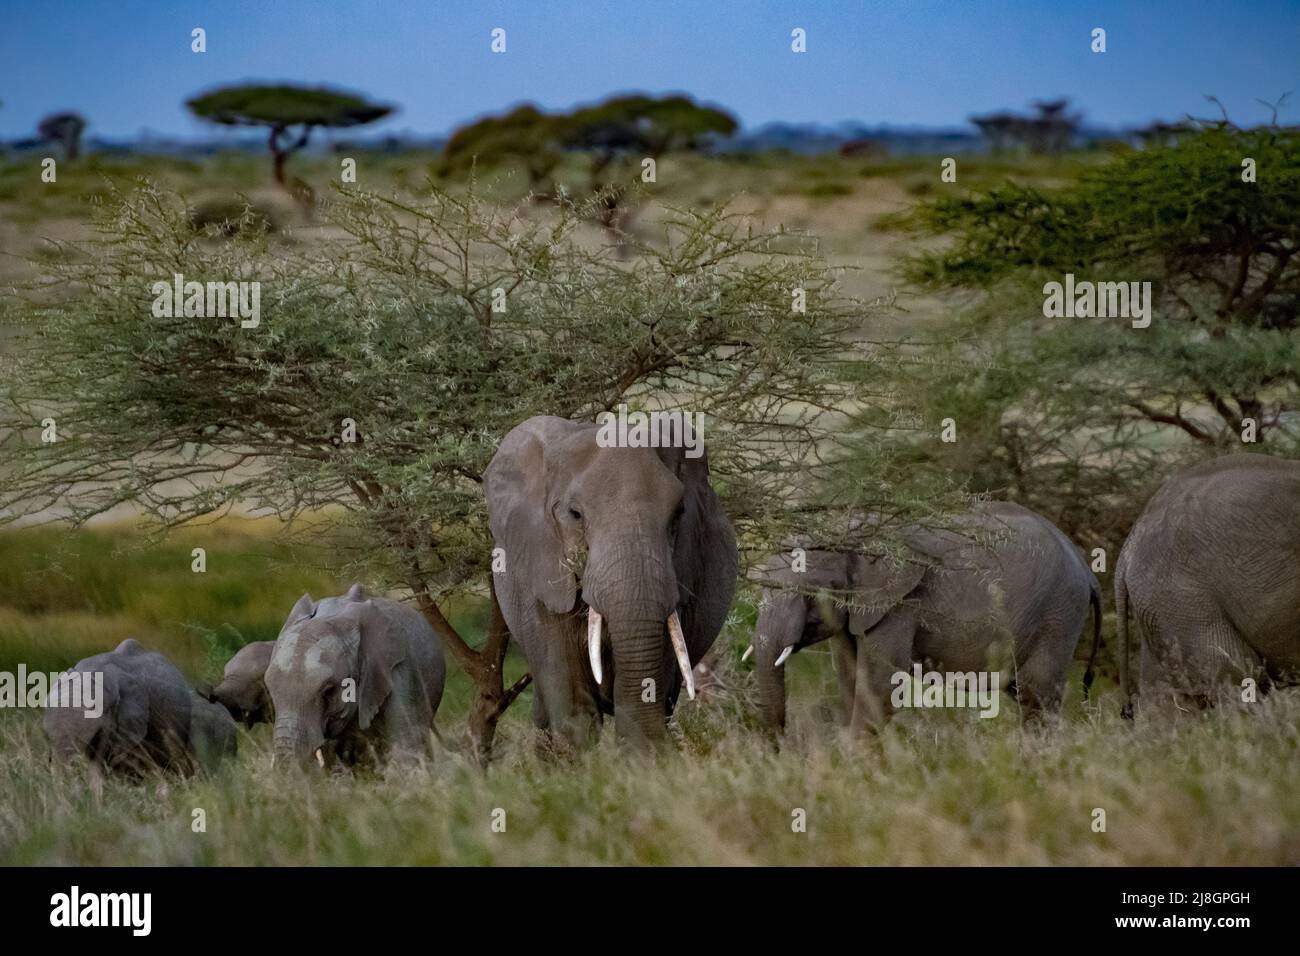 Elephants at Rest. Stock Photo